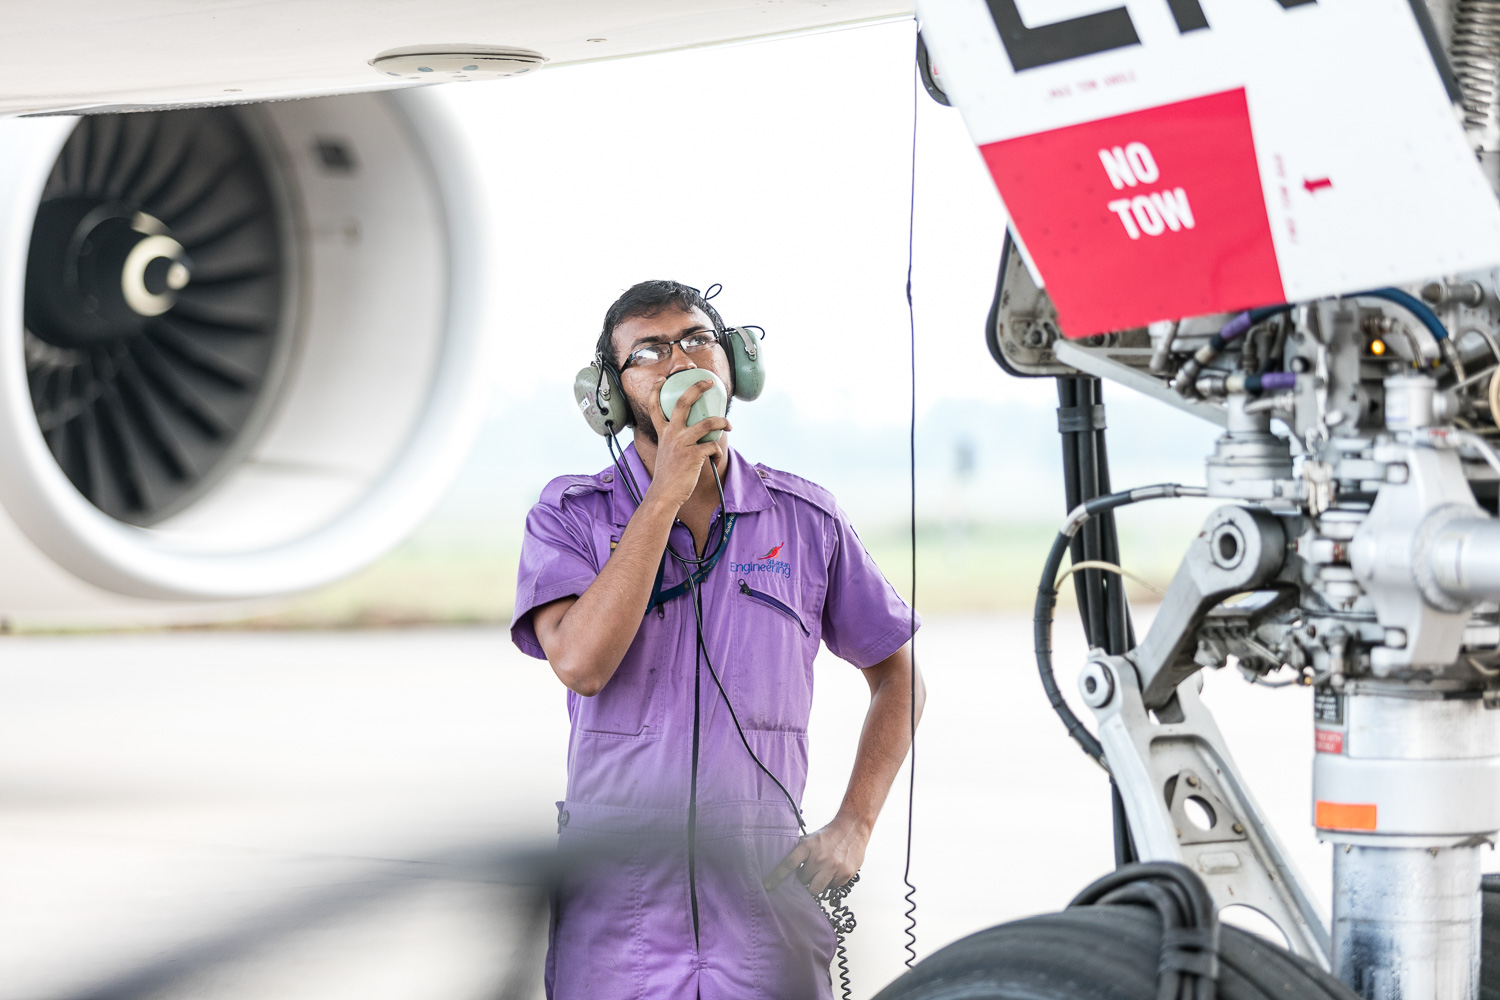 SriLankan Engineering standards reaffirmed at recent EASA audit